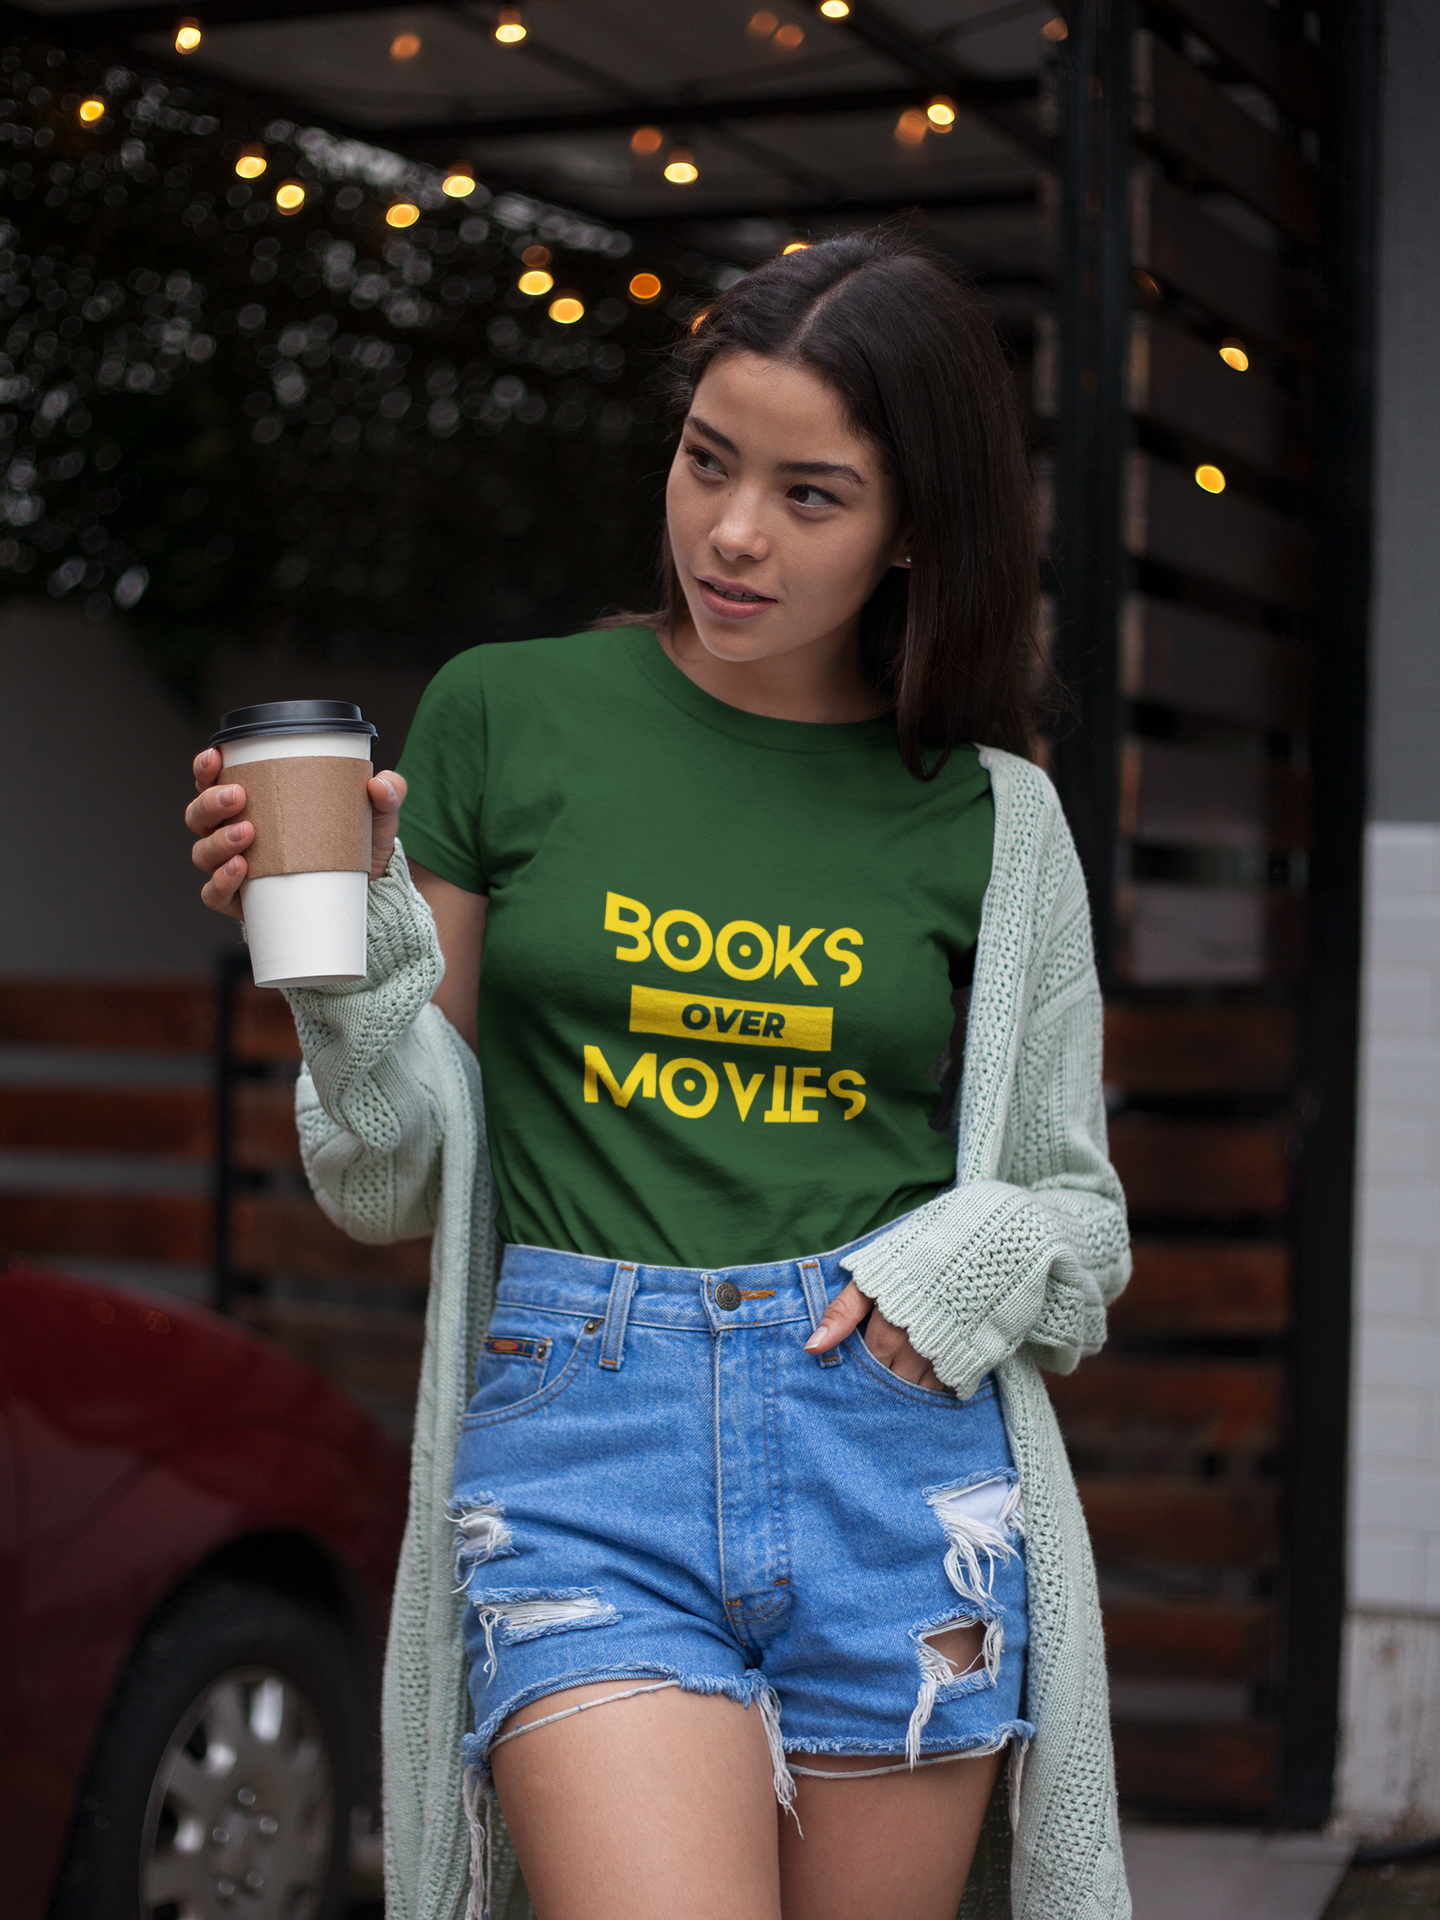 Books over Movies Tshirt